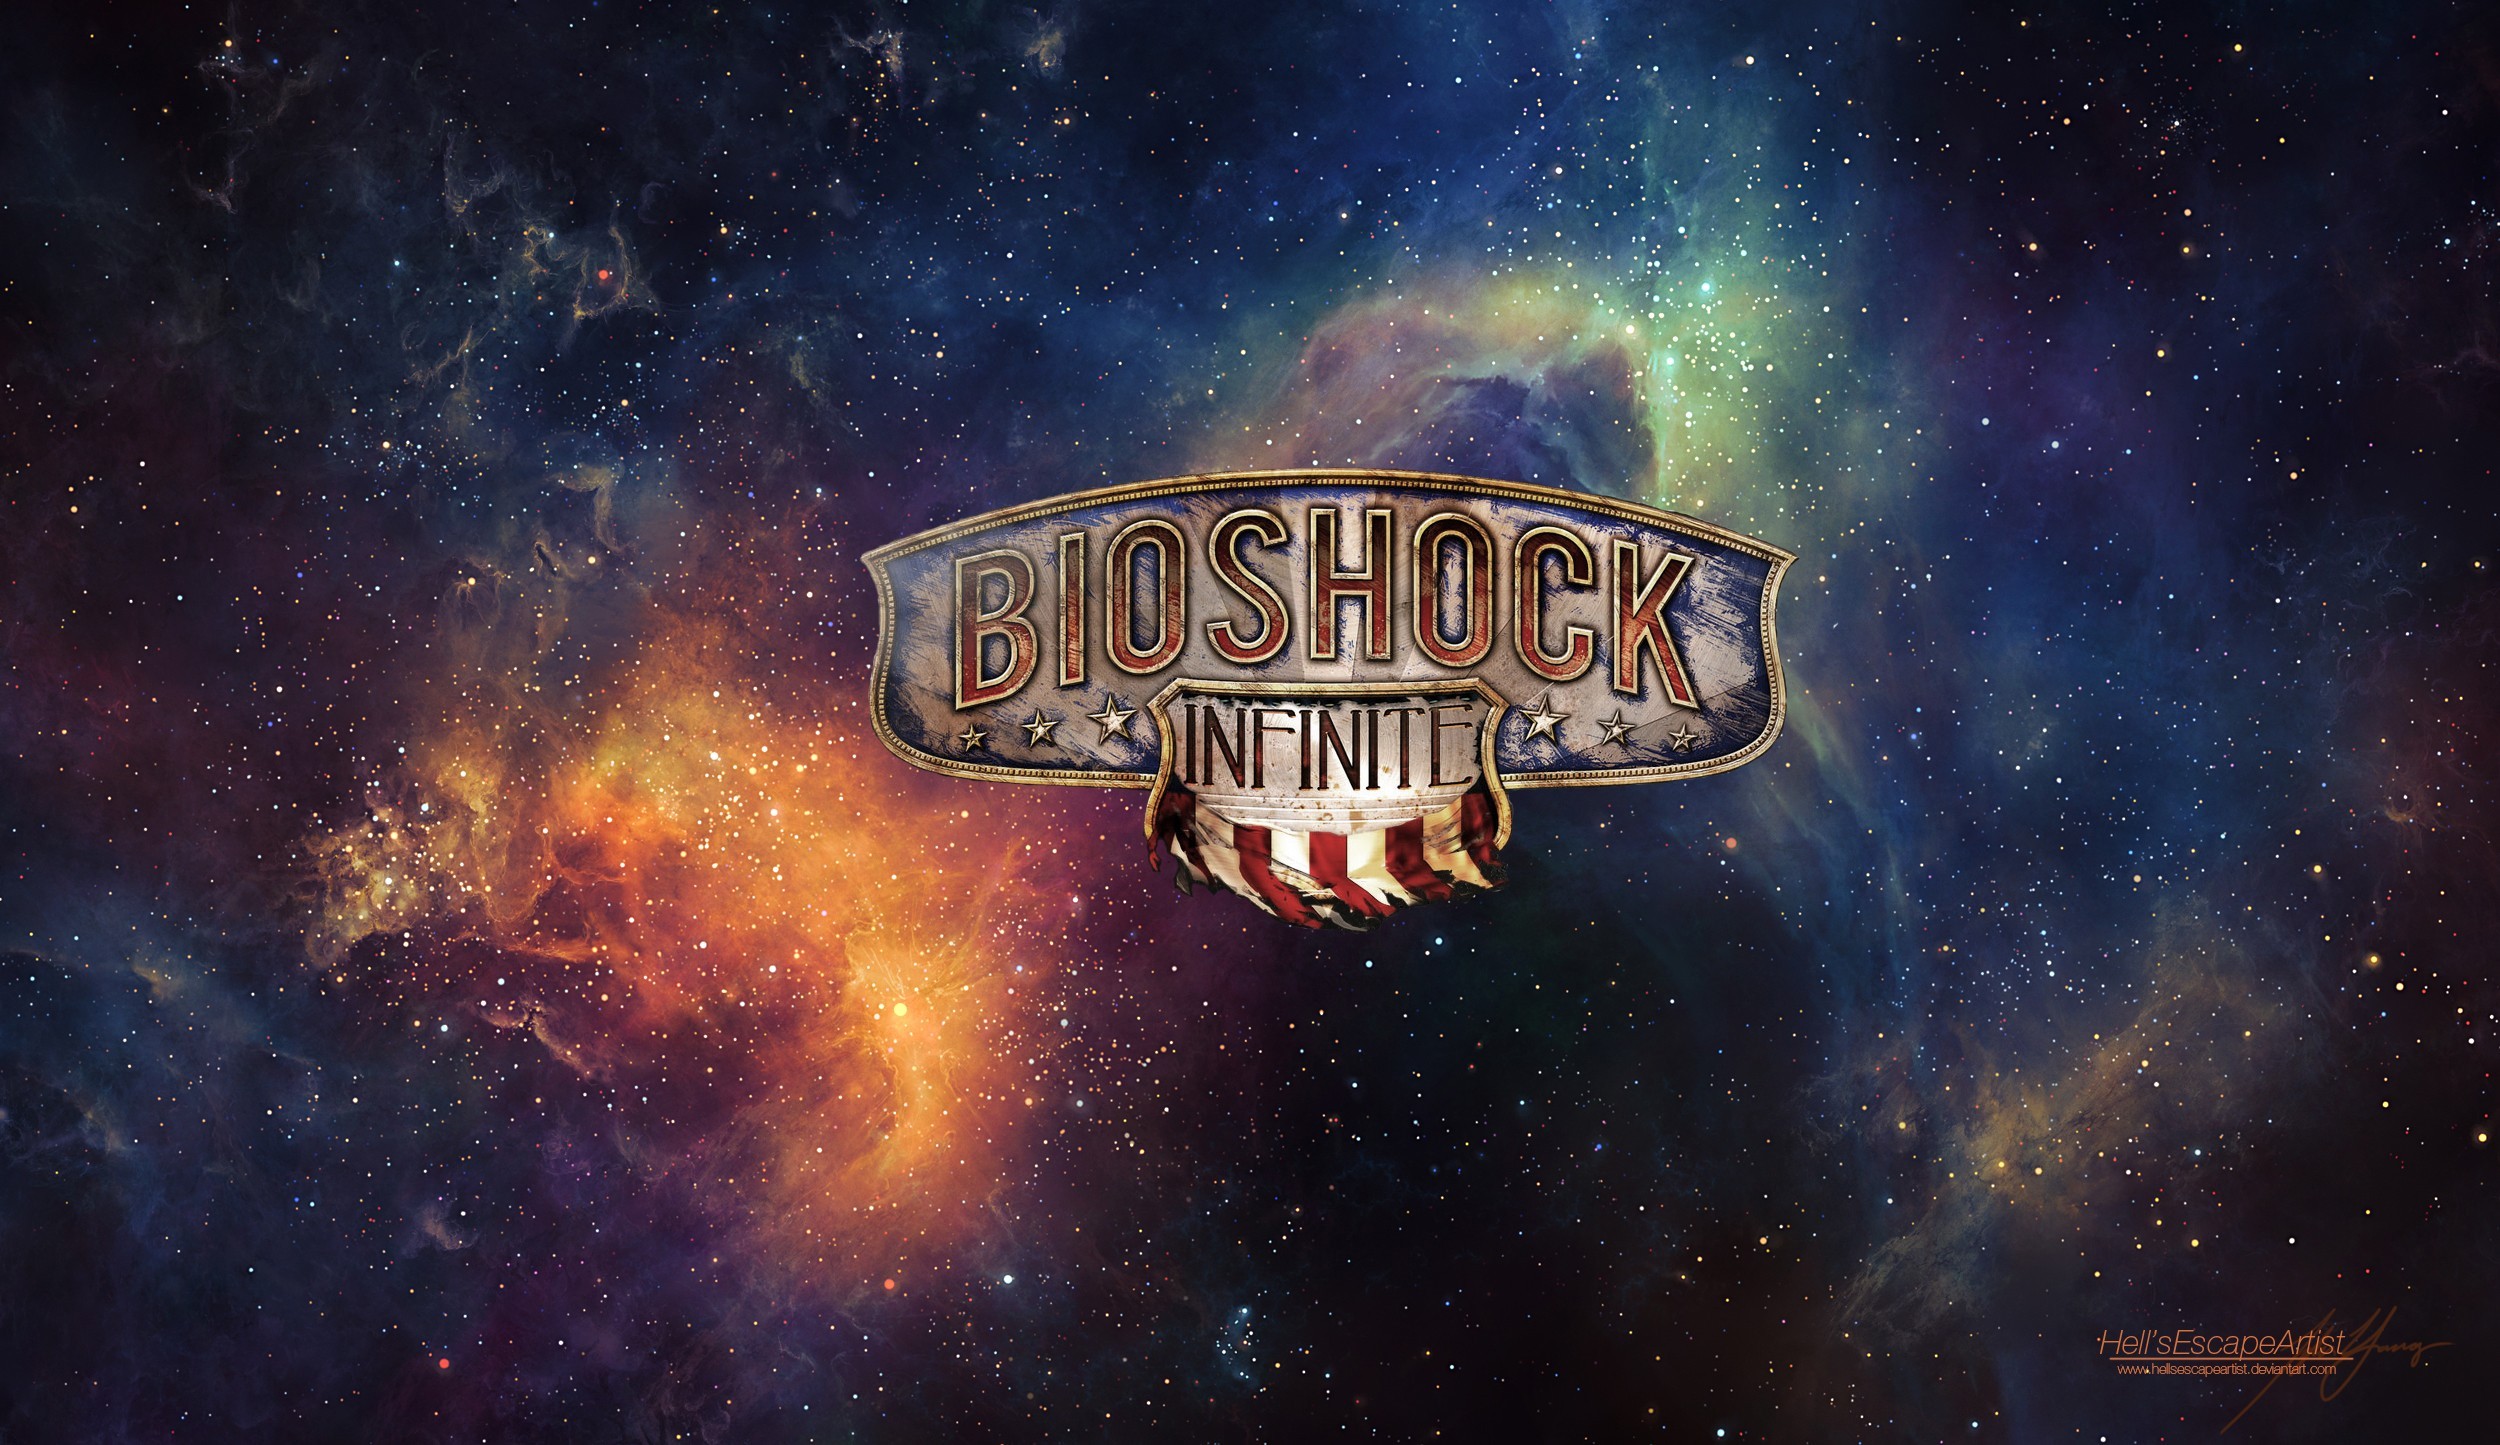 General 2500x1445 BioShock BioShock Infinite space artwork video games stars lighthouse PC gaming TylerCreatesWorlds